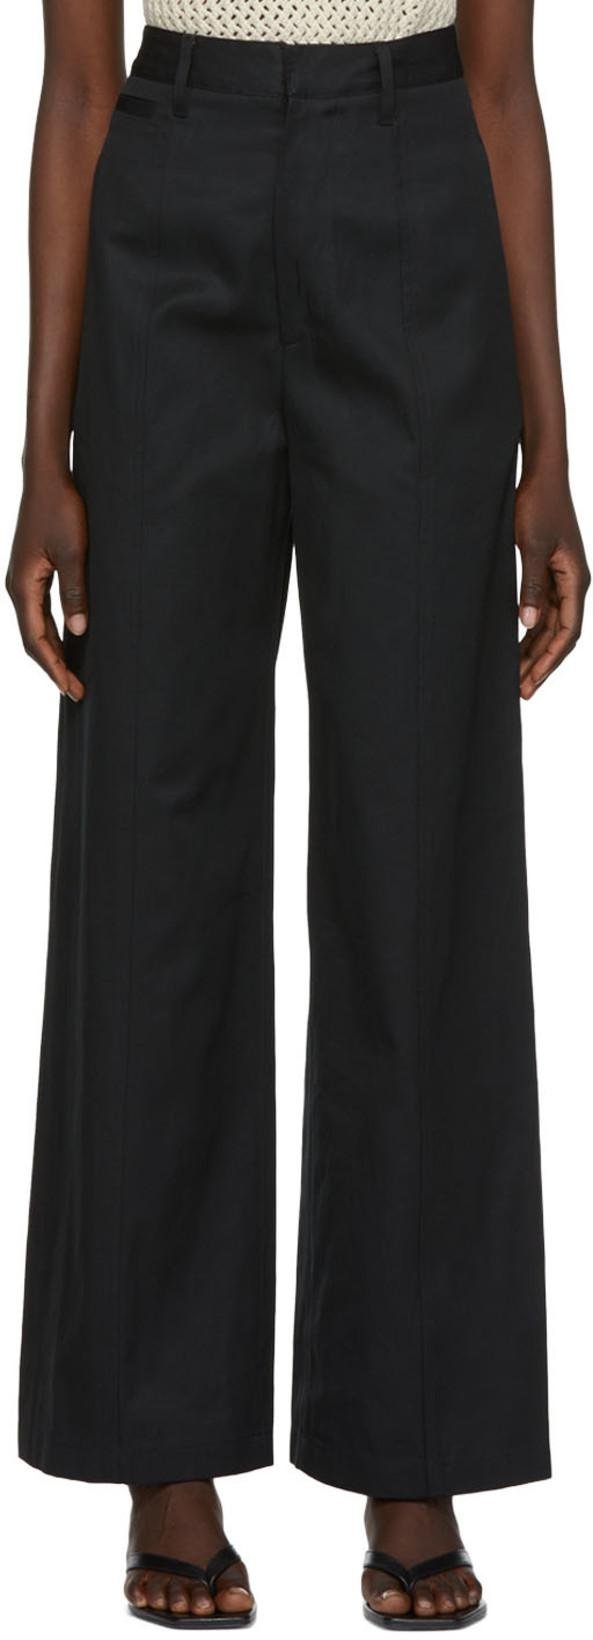 Black Lizzy Trousers by DEVEAUX NEW YORK